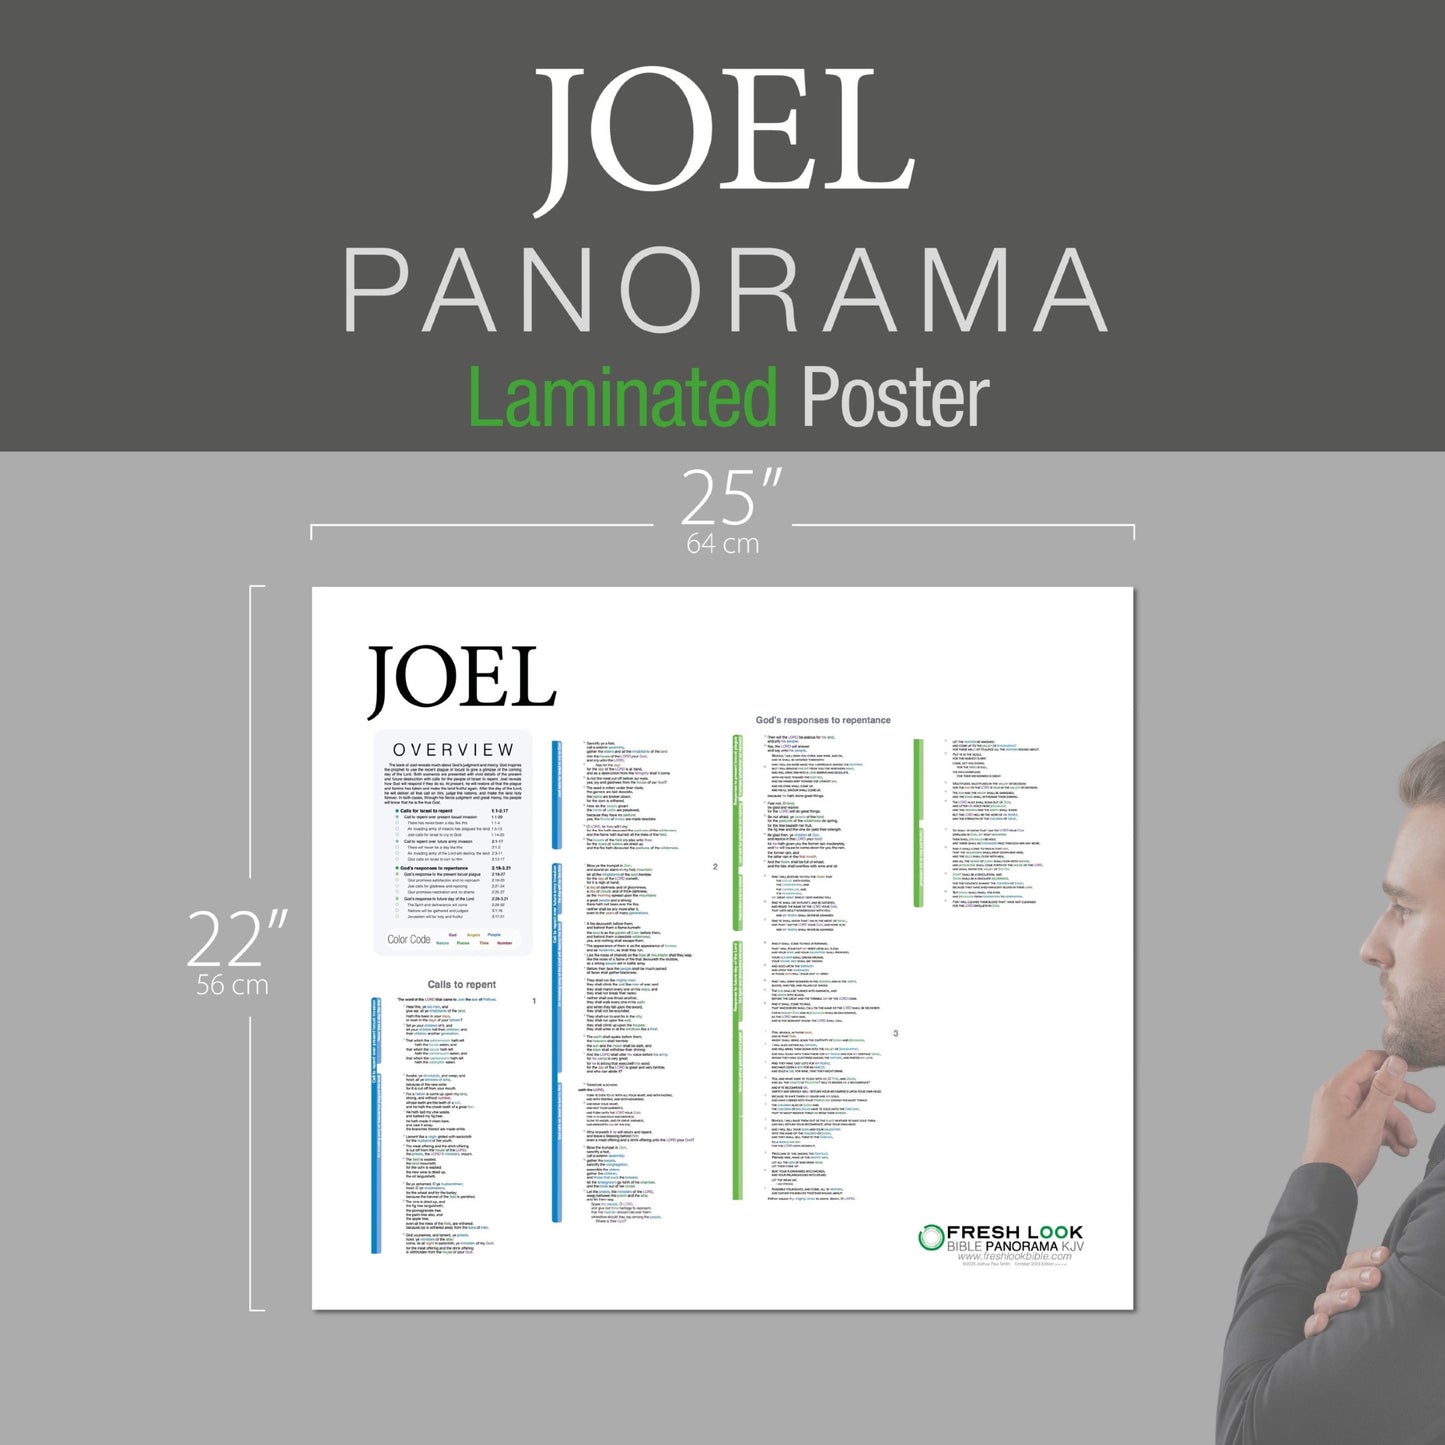 Joel Panorama Laminated